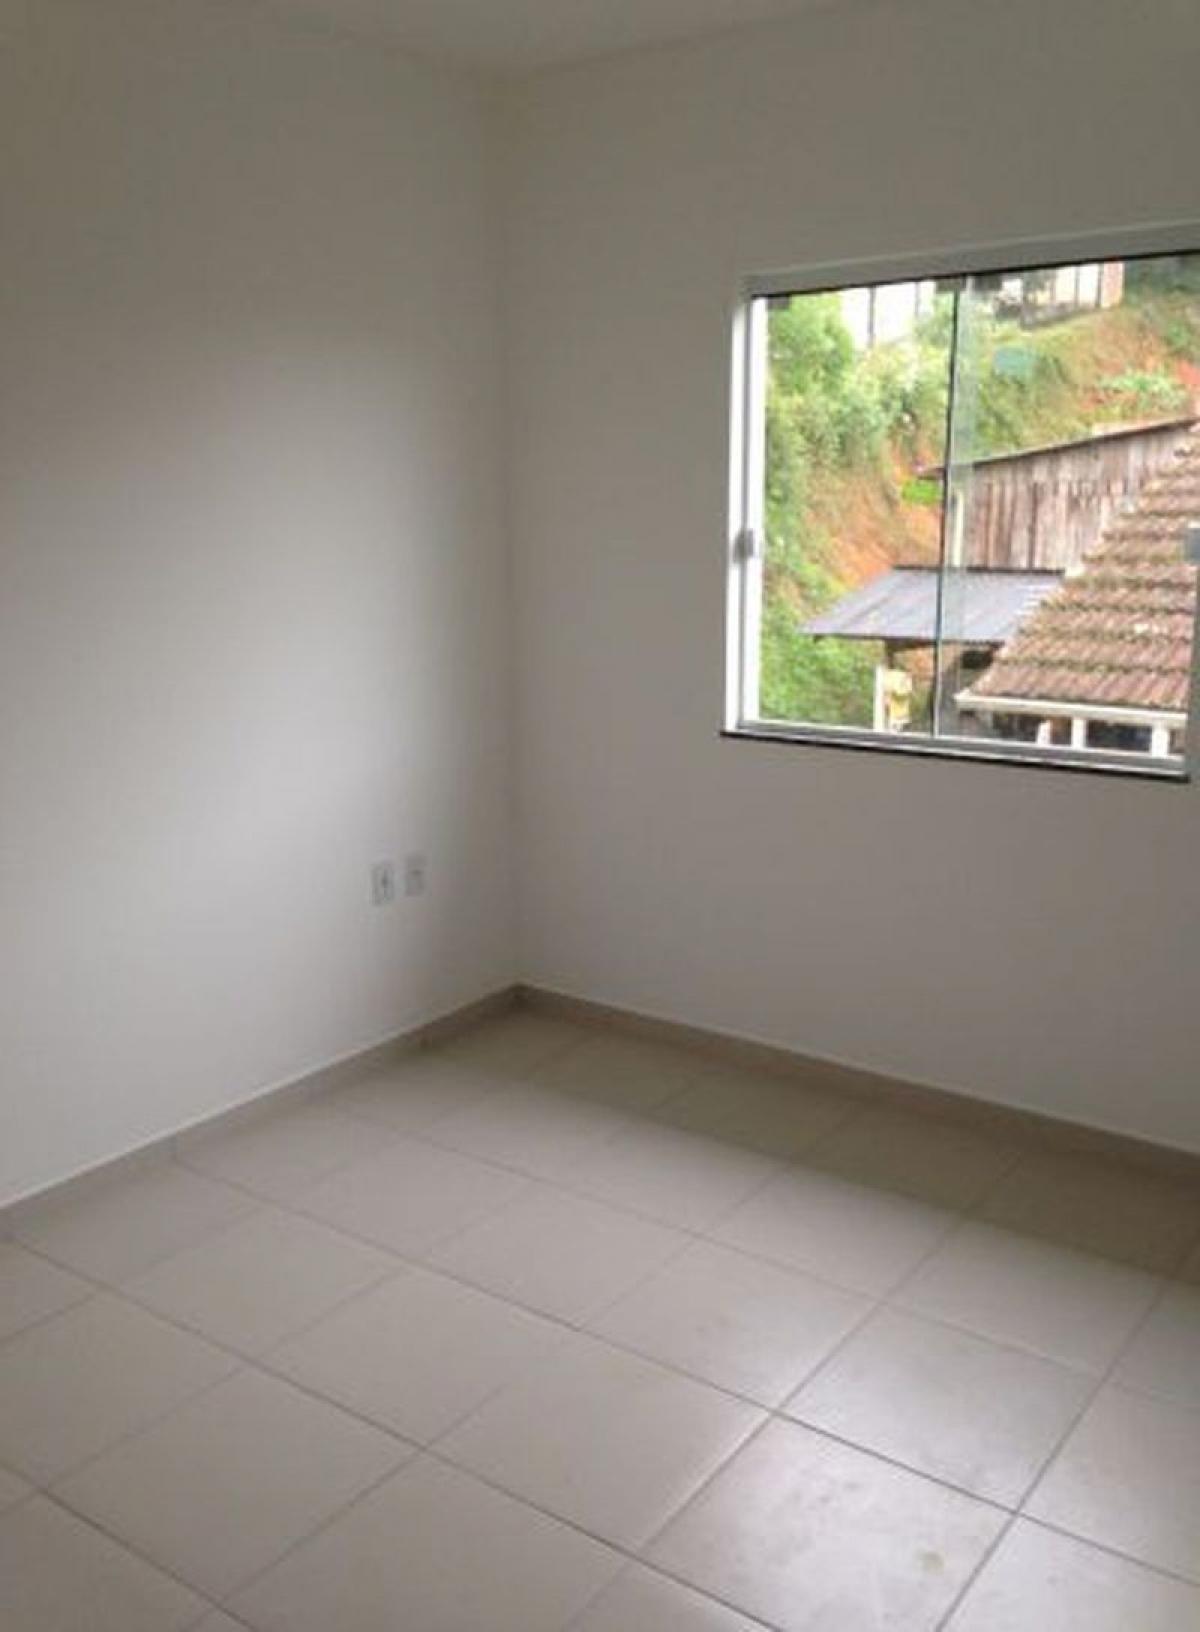 Picture of Home For Sale in Blumenau, Santa Catarina, Brazil